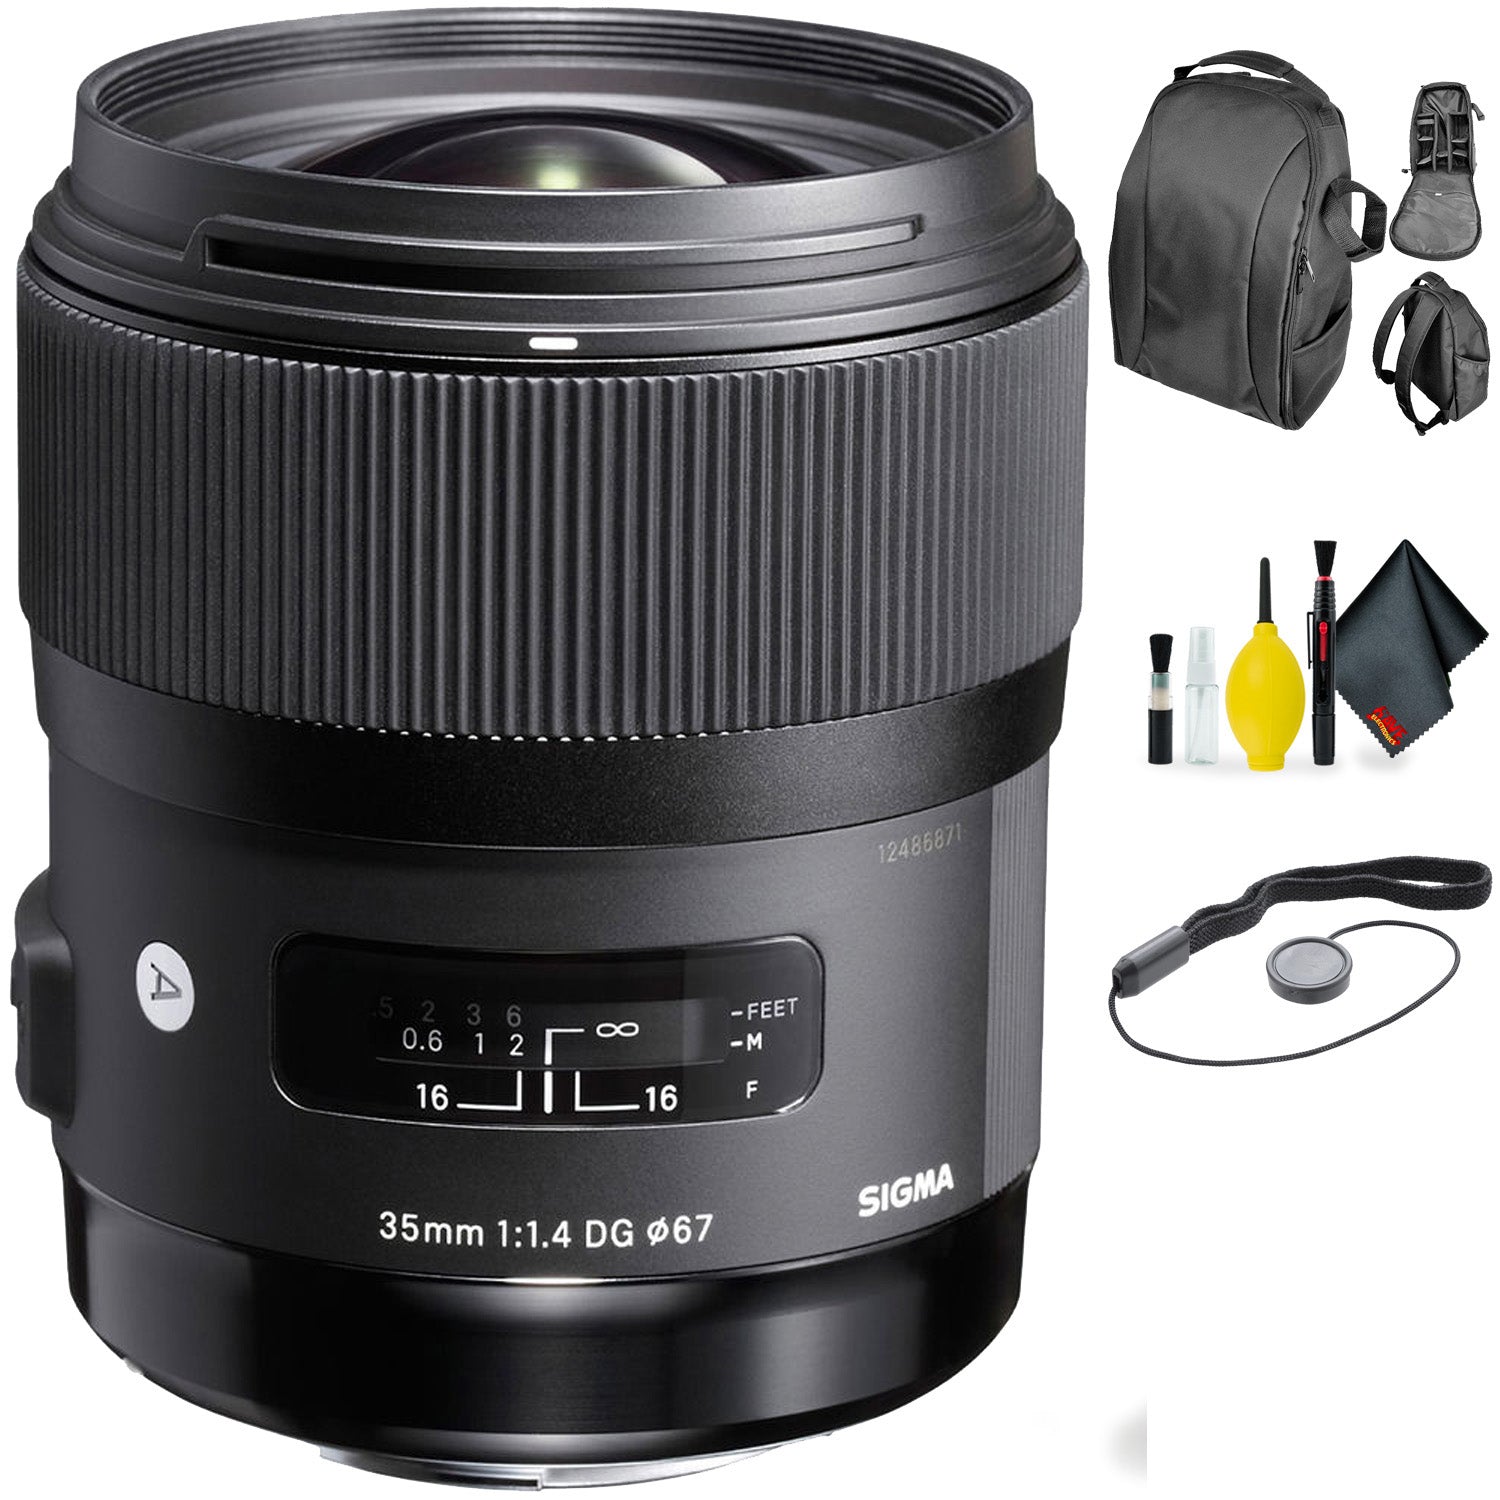 Sigma 35mm f/1.4 DG HSM Art Lens for Nikon + Deluxe Lens Cleaning Kit Bundle